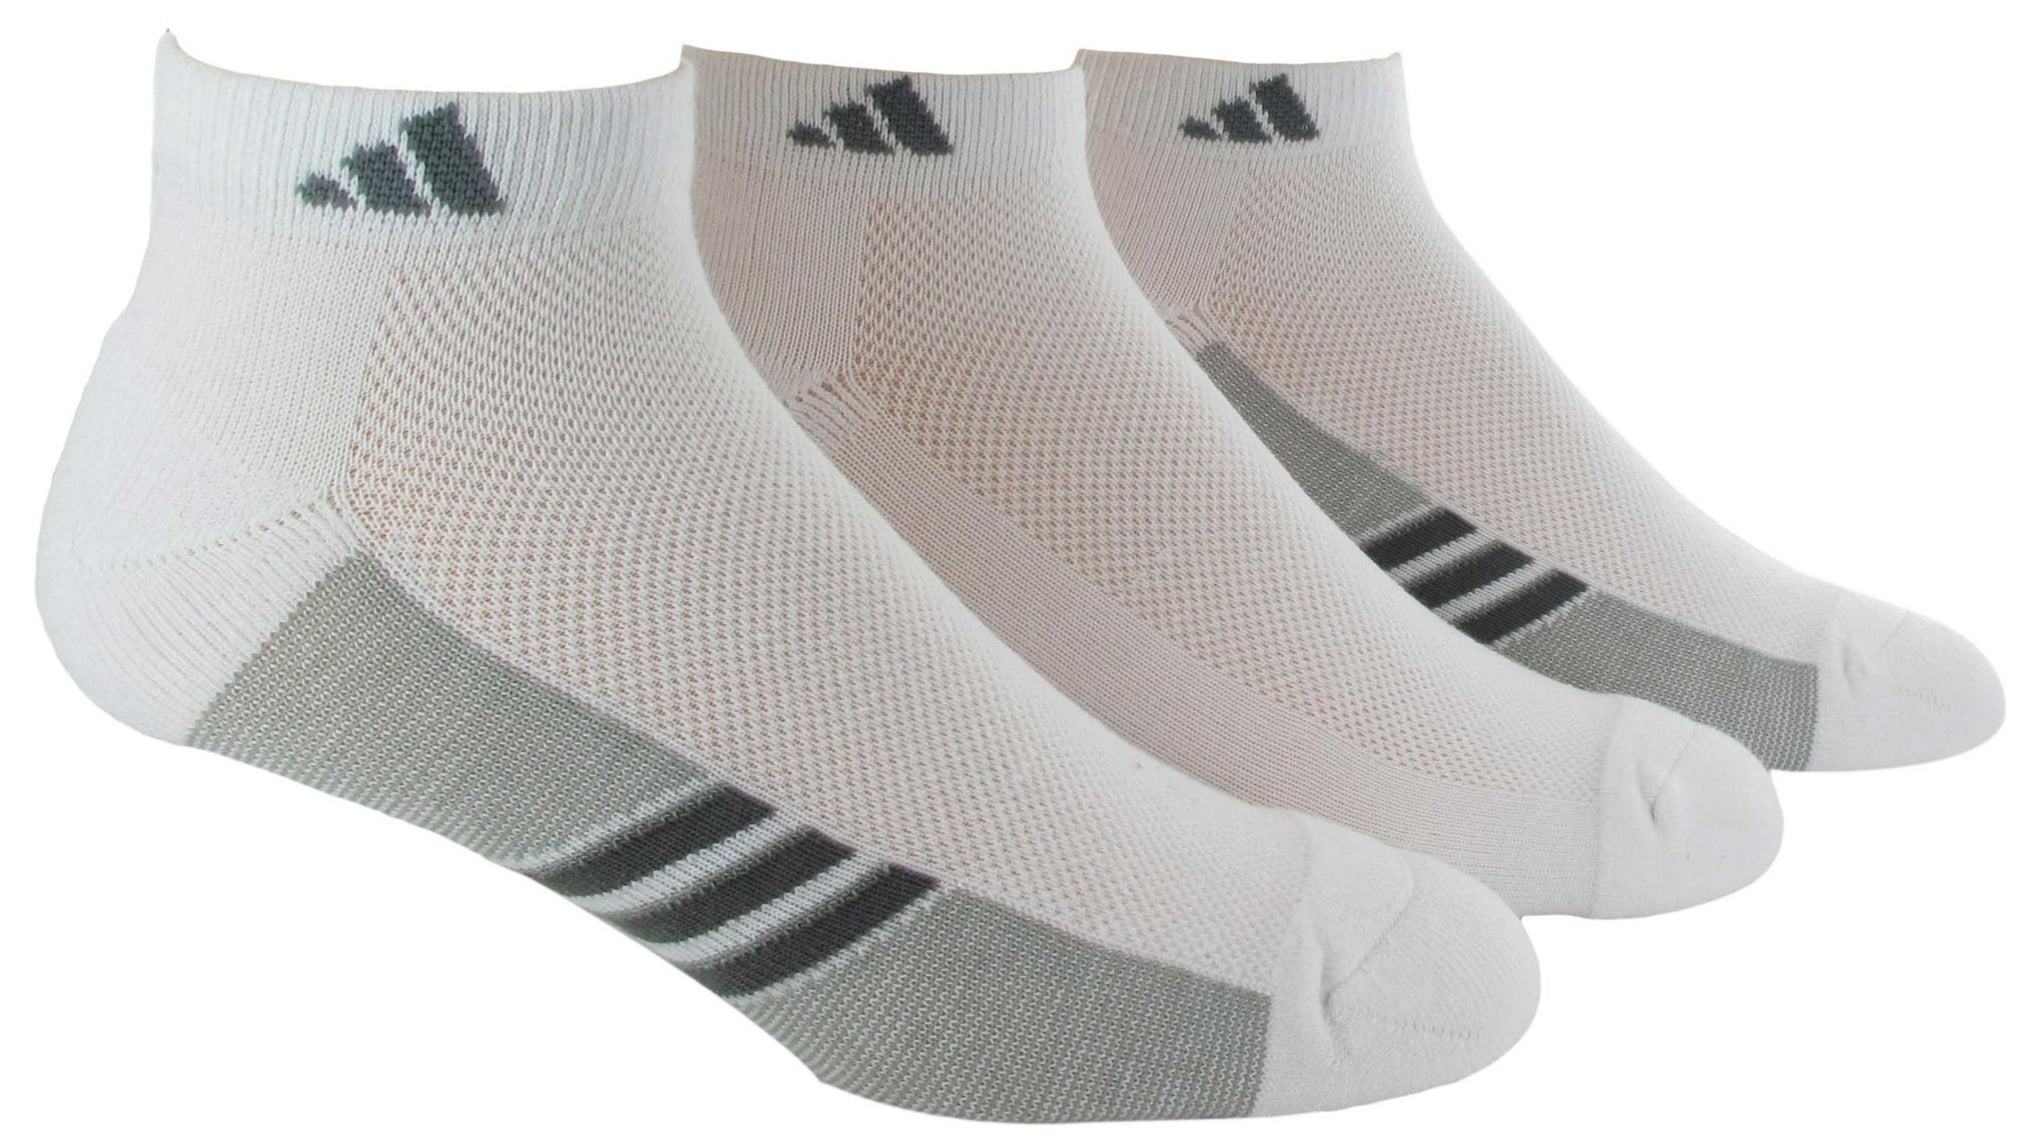 adidas men's climacool superlite low cut socks